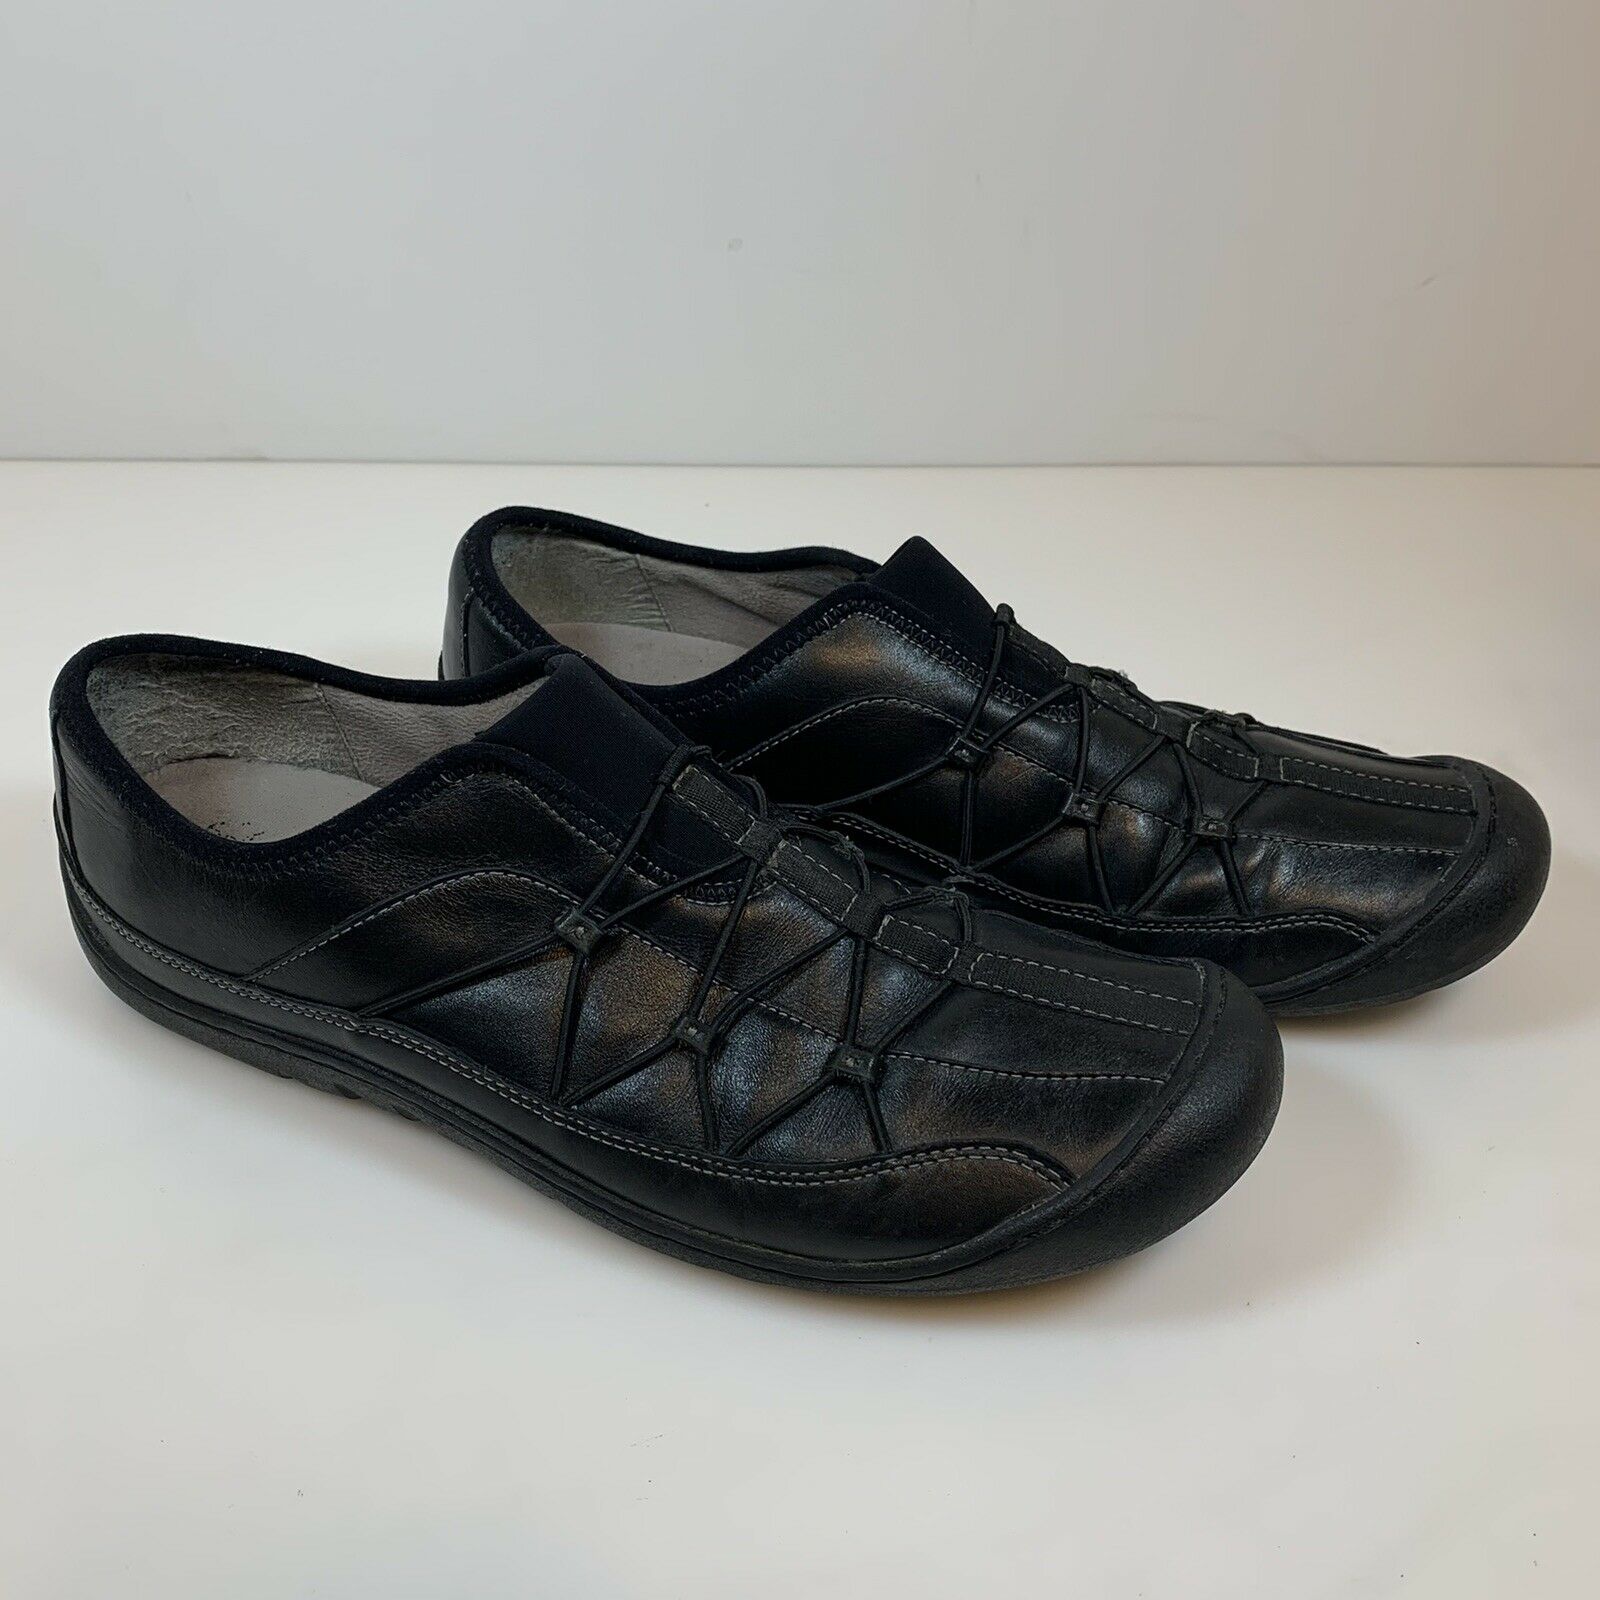 Clarks Shoes Springers Women’s Slip On Casual Low Heel Black Size 11 M